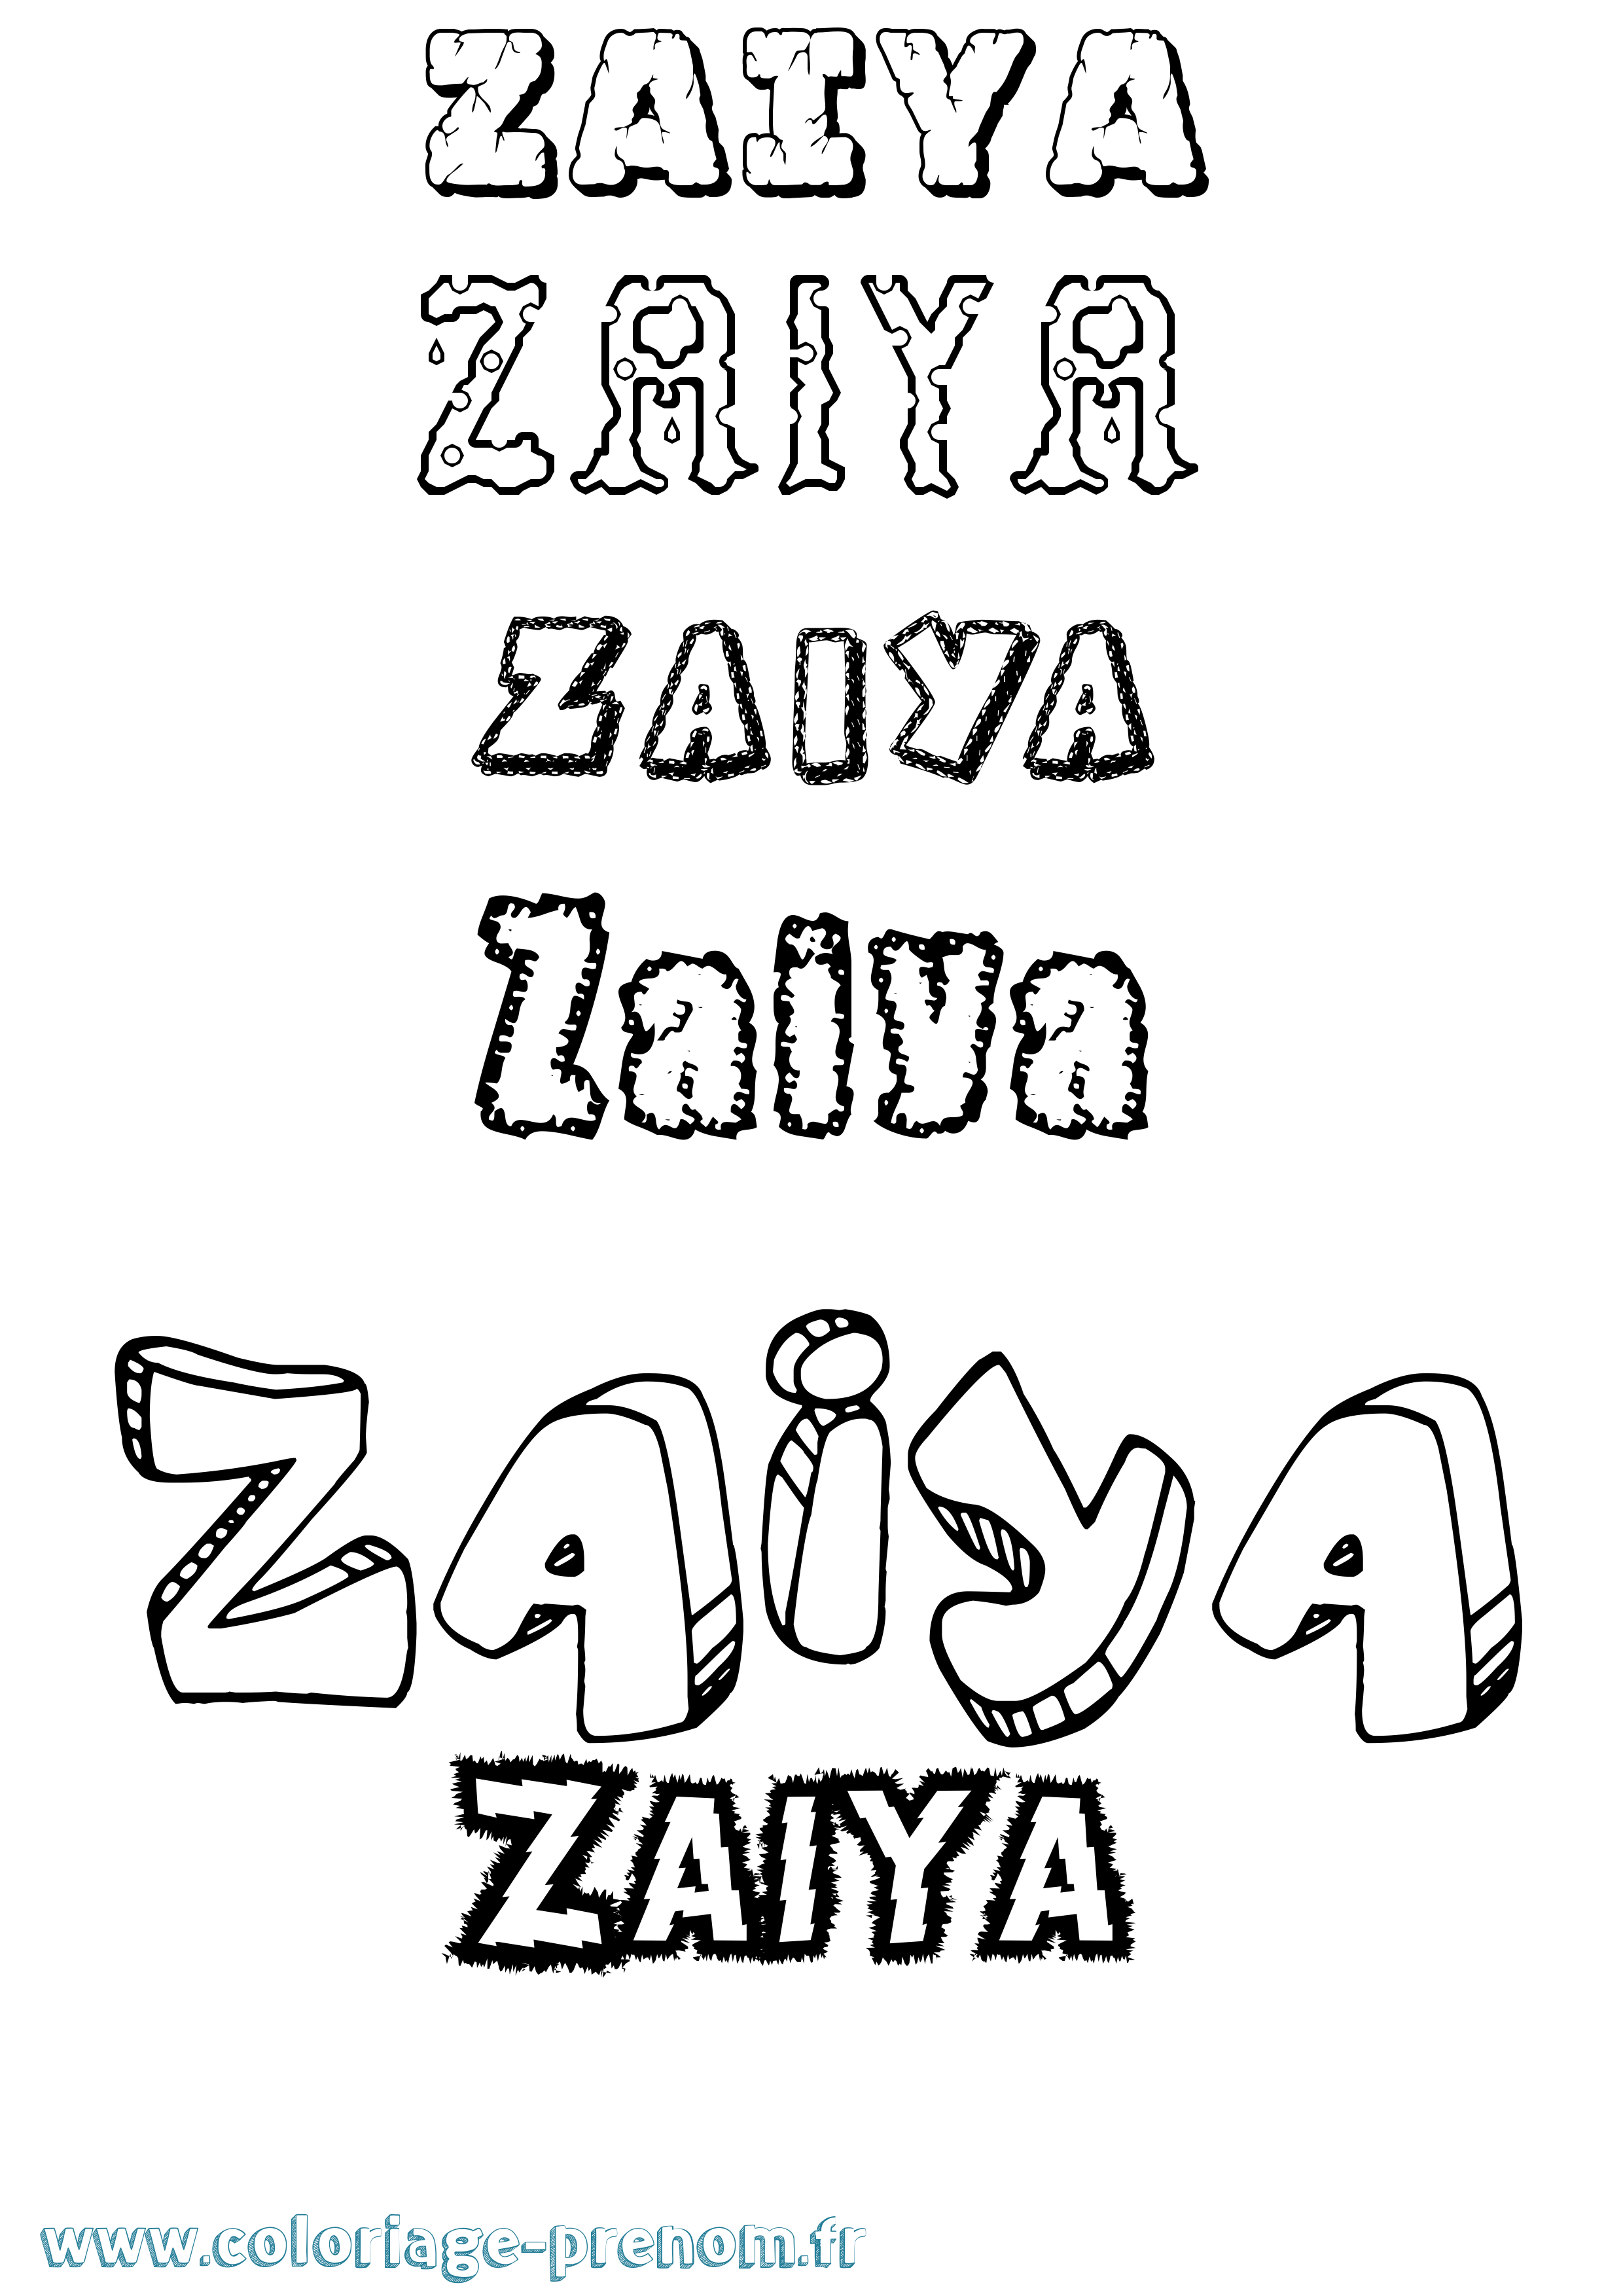 Coloriage prénom Zaiya Destructuré